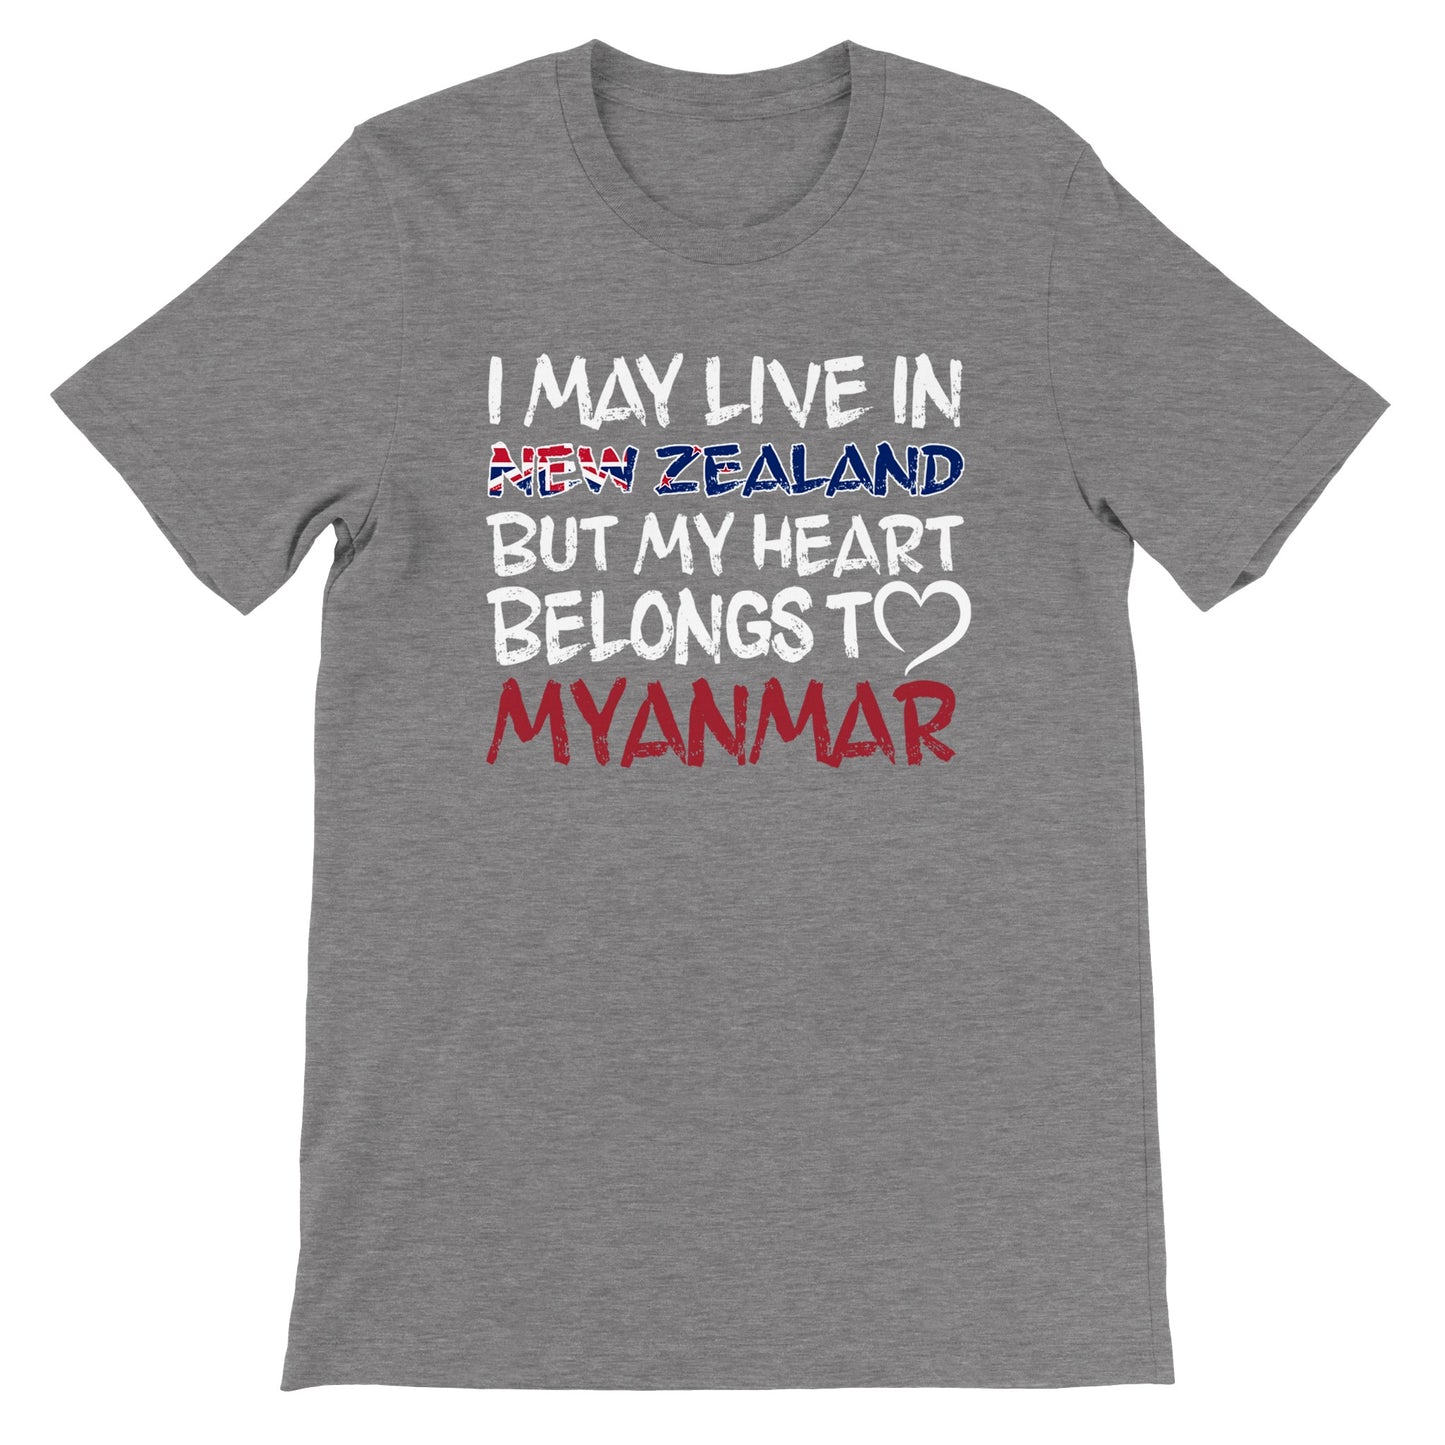 New Zealand🇳🇿 Edition - My Heart Belongs to Myanmar